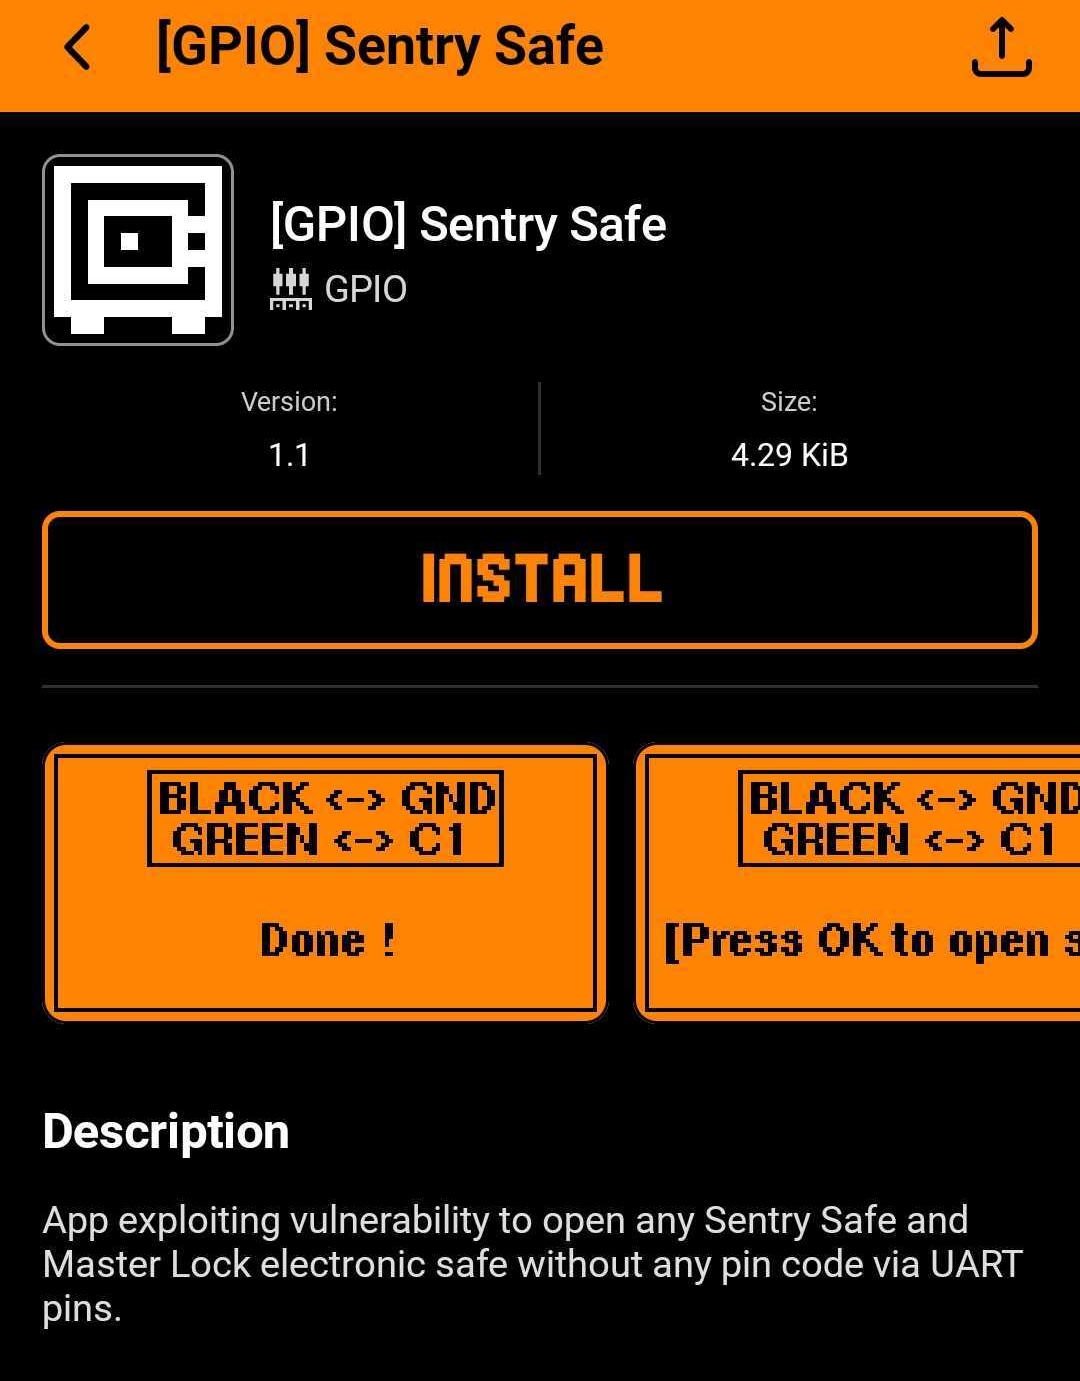 Screenshot of the [GPIO] Sentry Safe Fap in the Flipper Zero Mobile Application